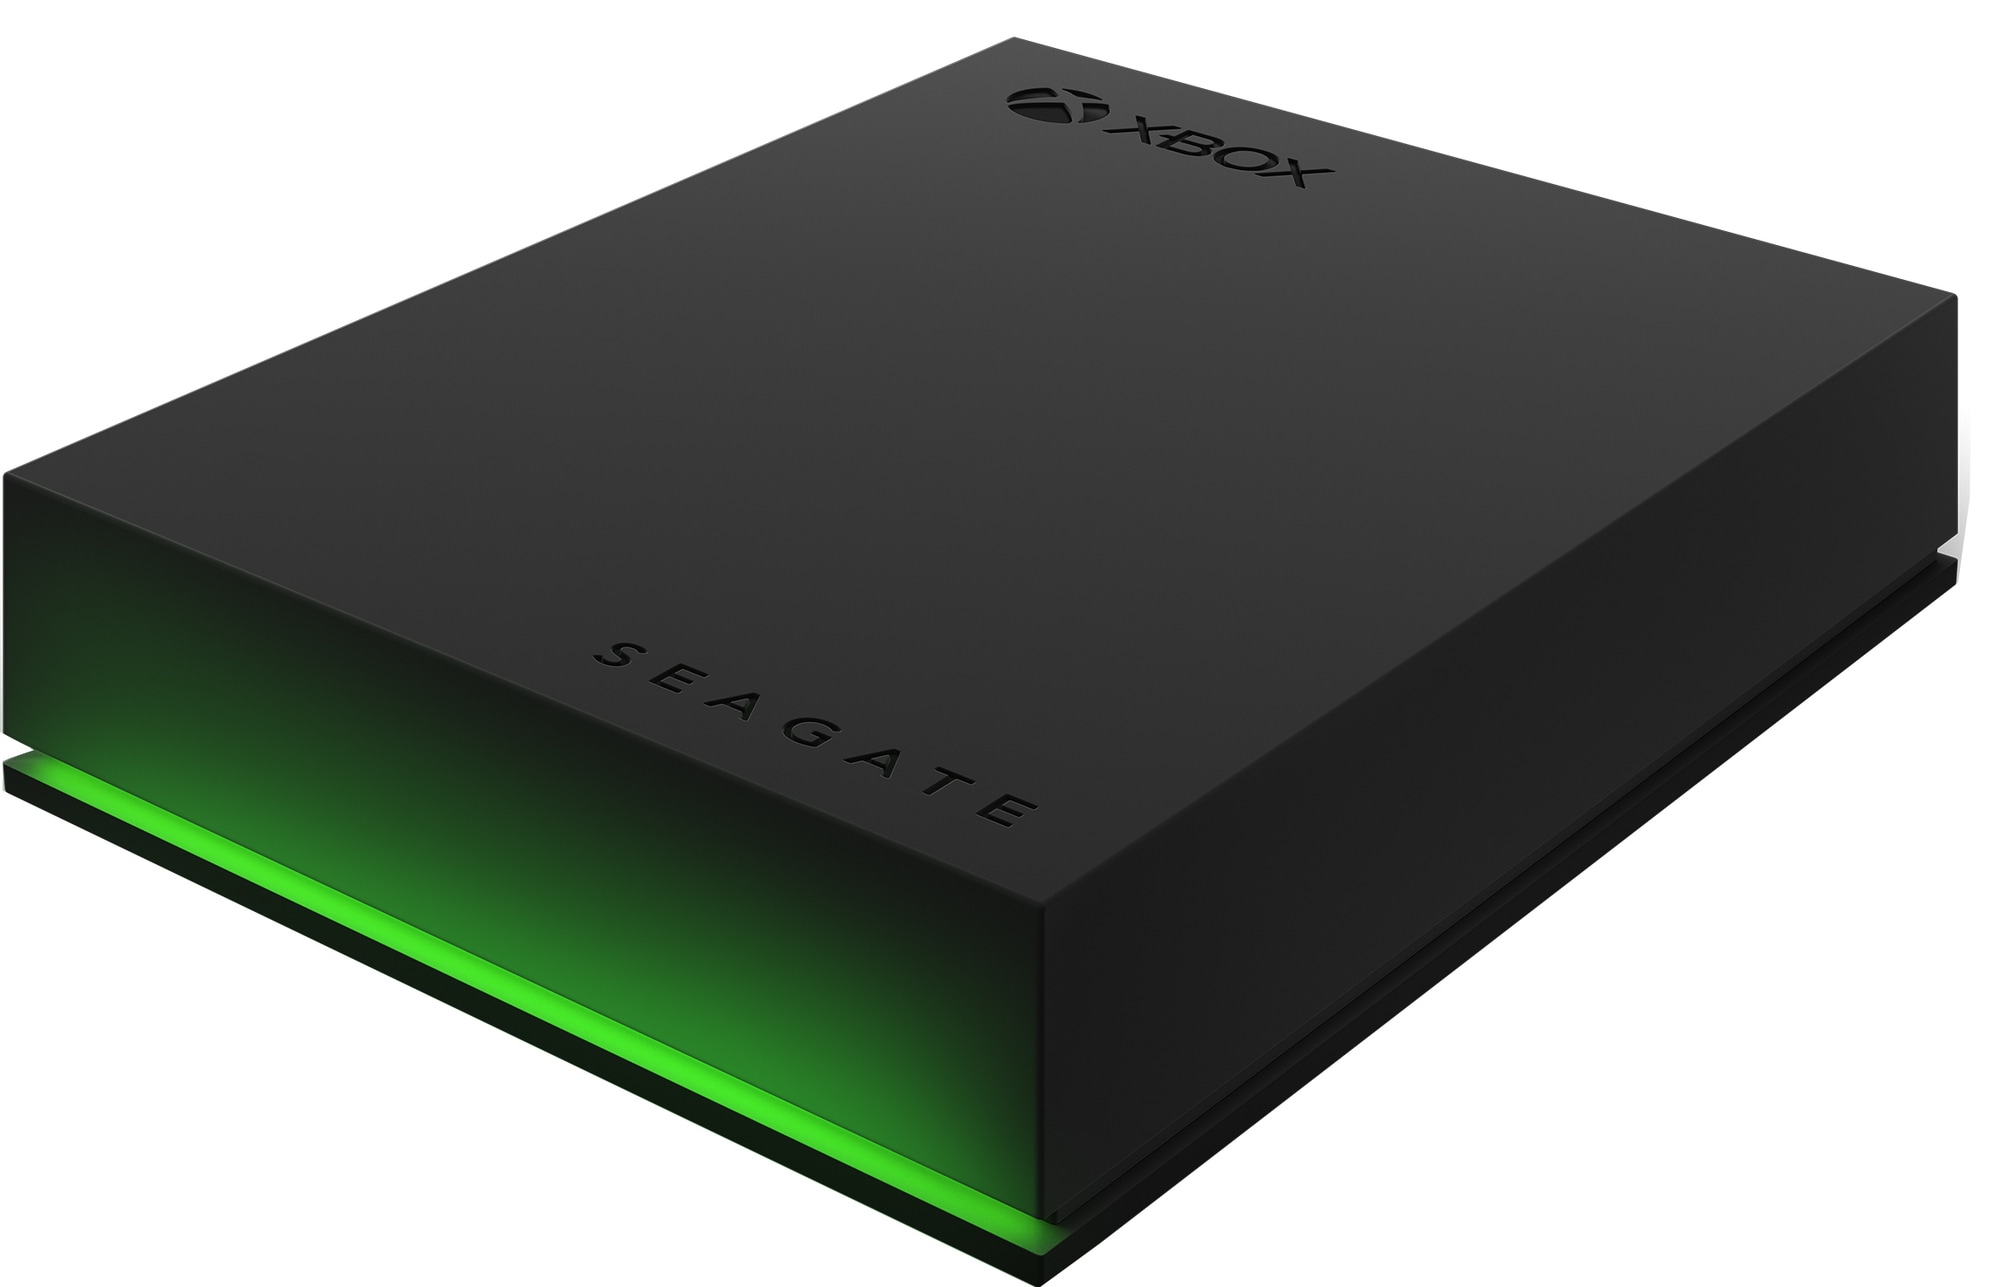 Seagate Game Drive for Xbox ulkoinen kovalevy 4 TB (musta) - Gigantti  verkkokauppa